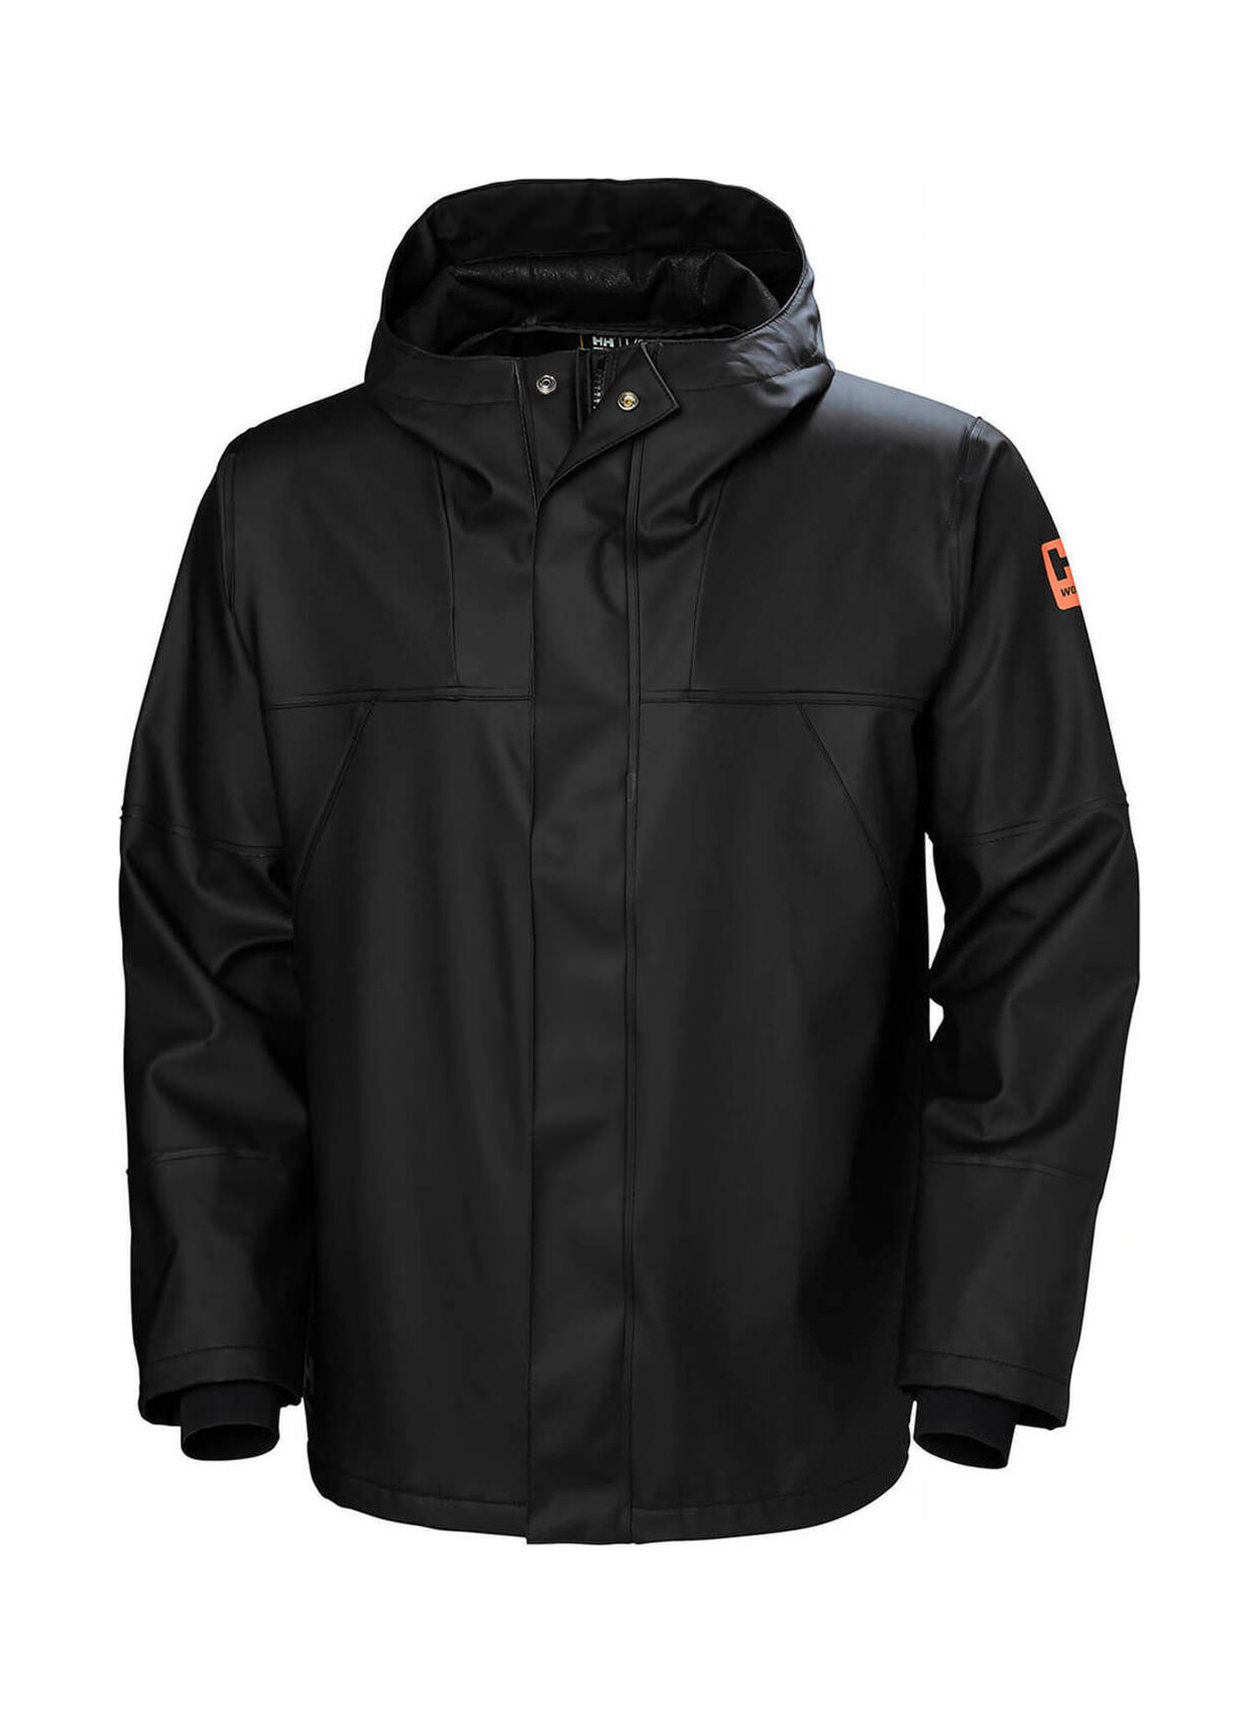 Corporate Helly Hansen Men's Black Storm Rain Jacket